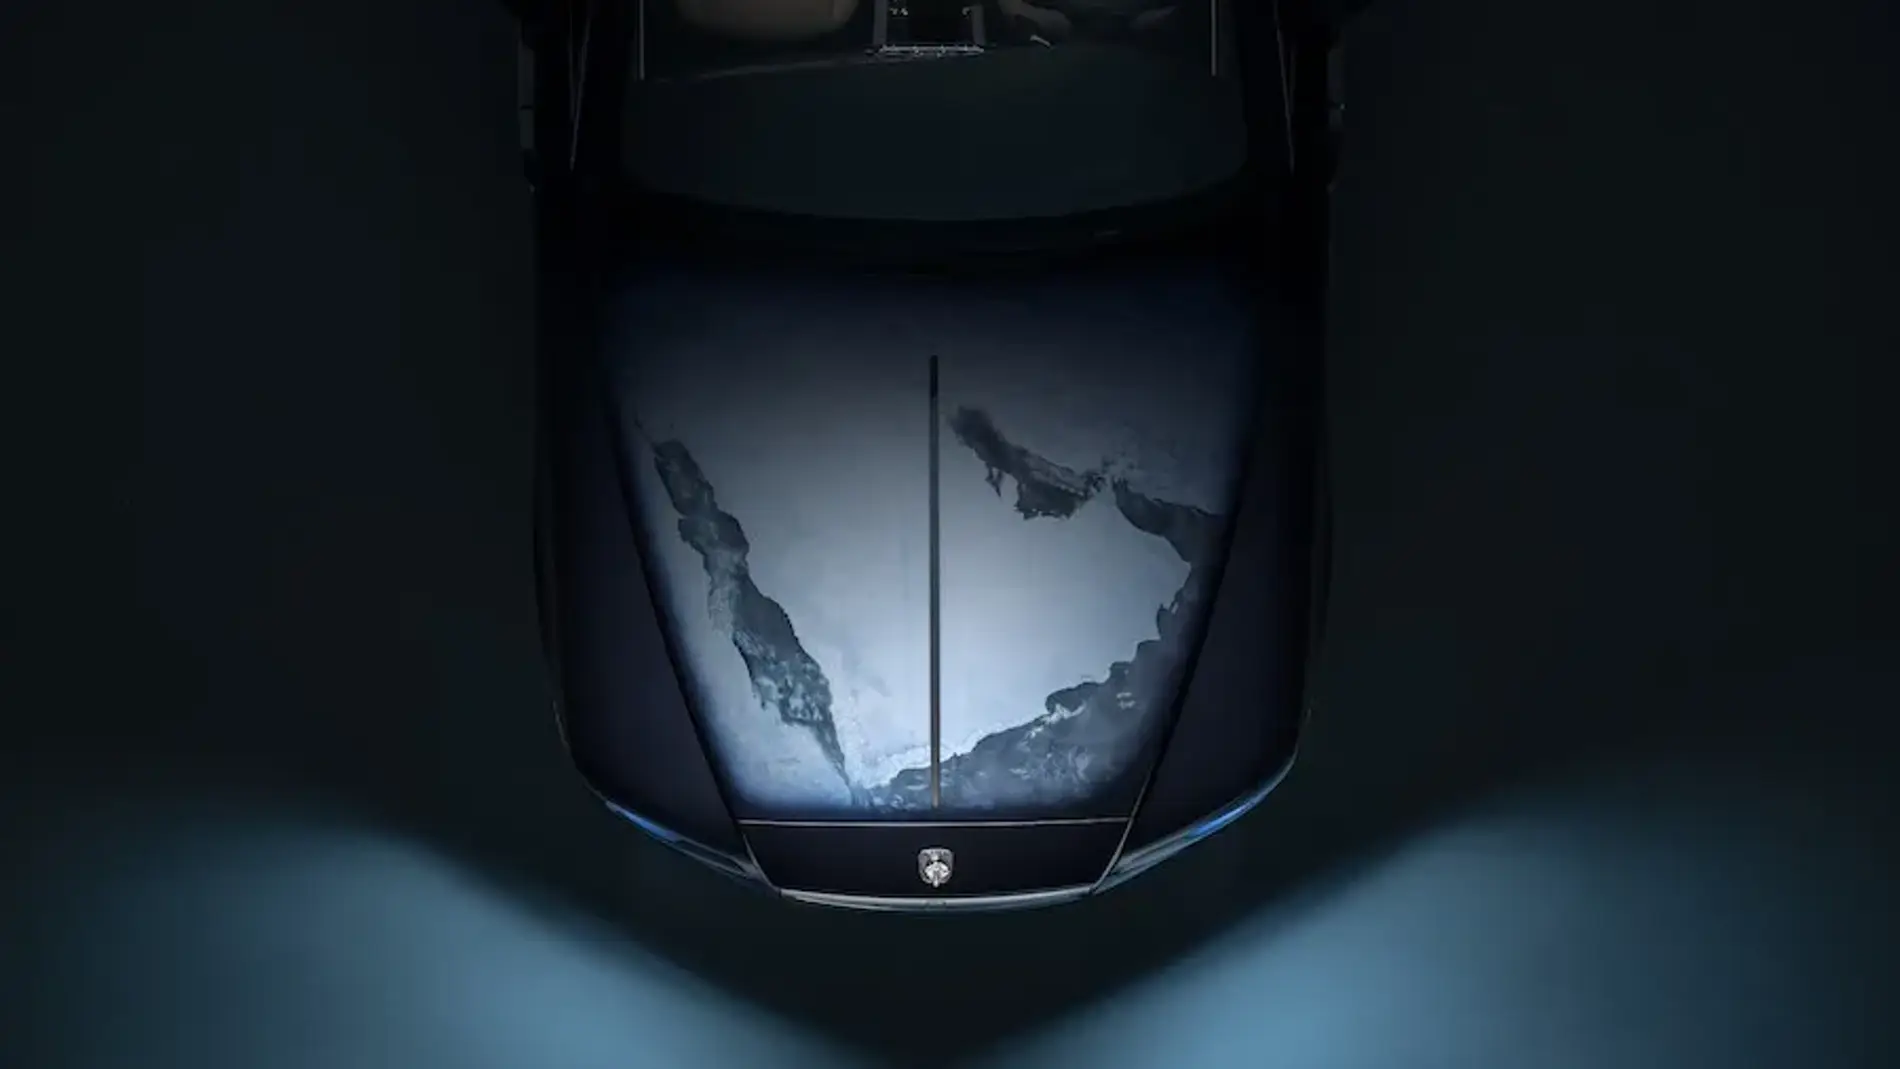 Rolls Royce Wraith – Inspired By Earth